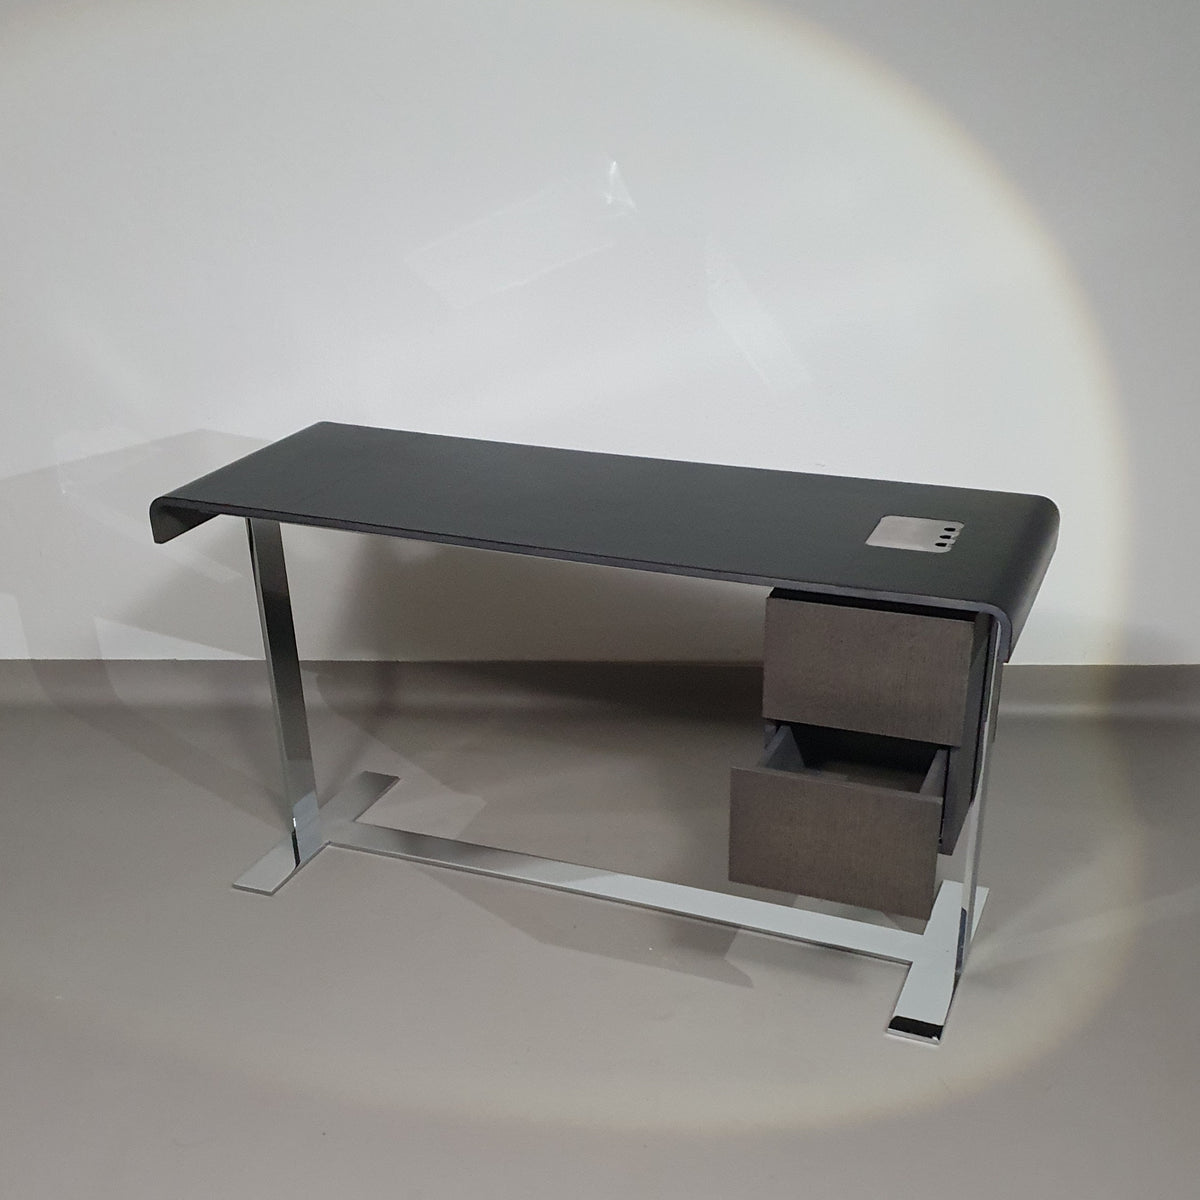 Eileen designed by Antonio Citterio for B&B Italia is a desk